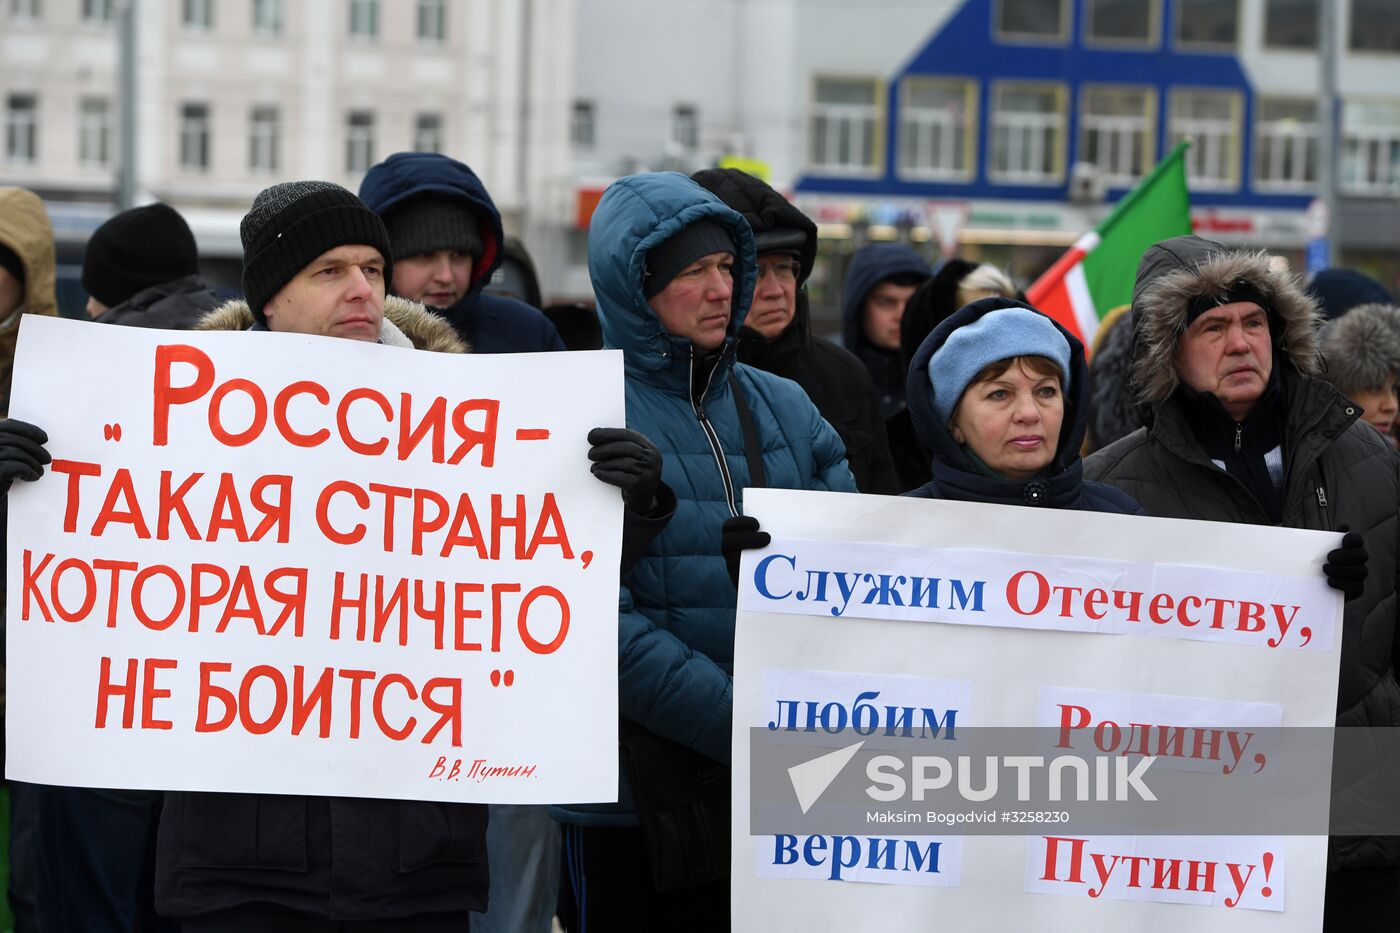 Rally in support of Russian President Vladimir Putin